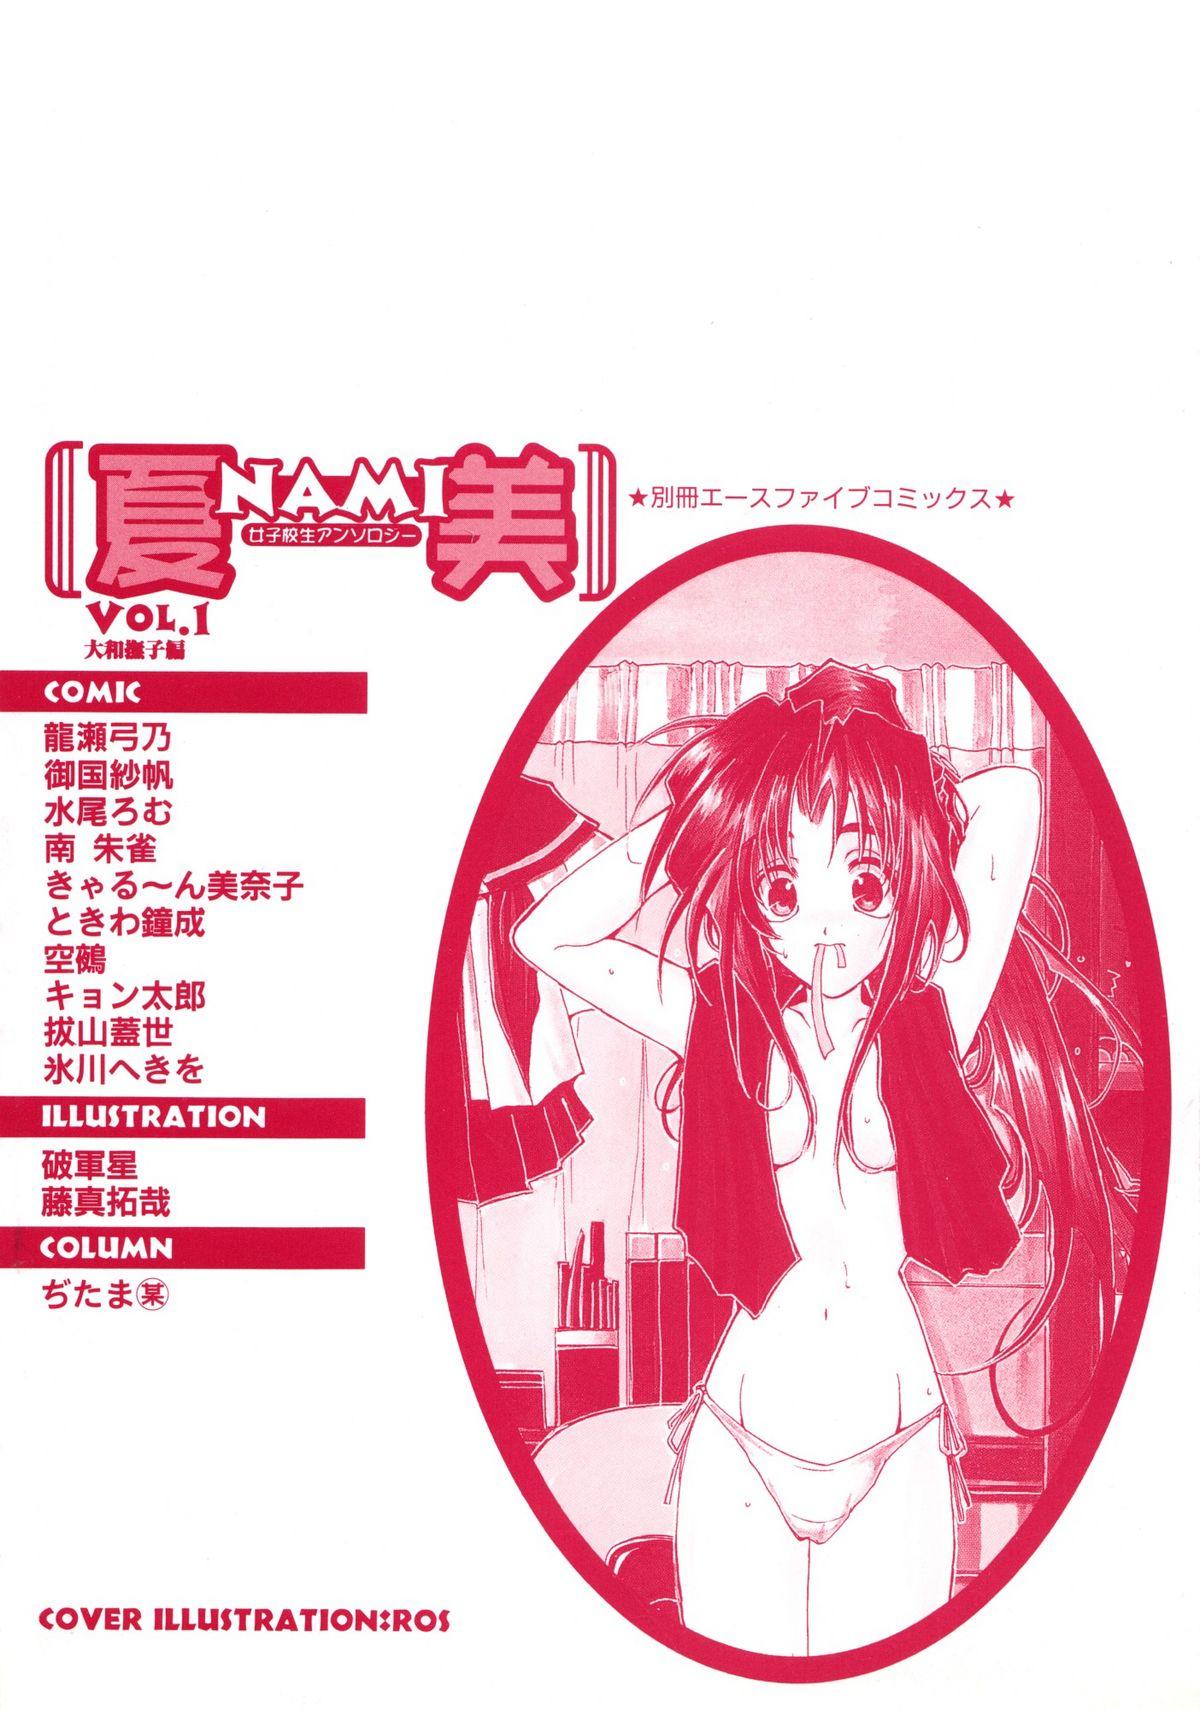 NAMI Joshikousei Anthology Vol. 1 - Yamato Nadeshiko Hen 166